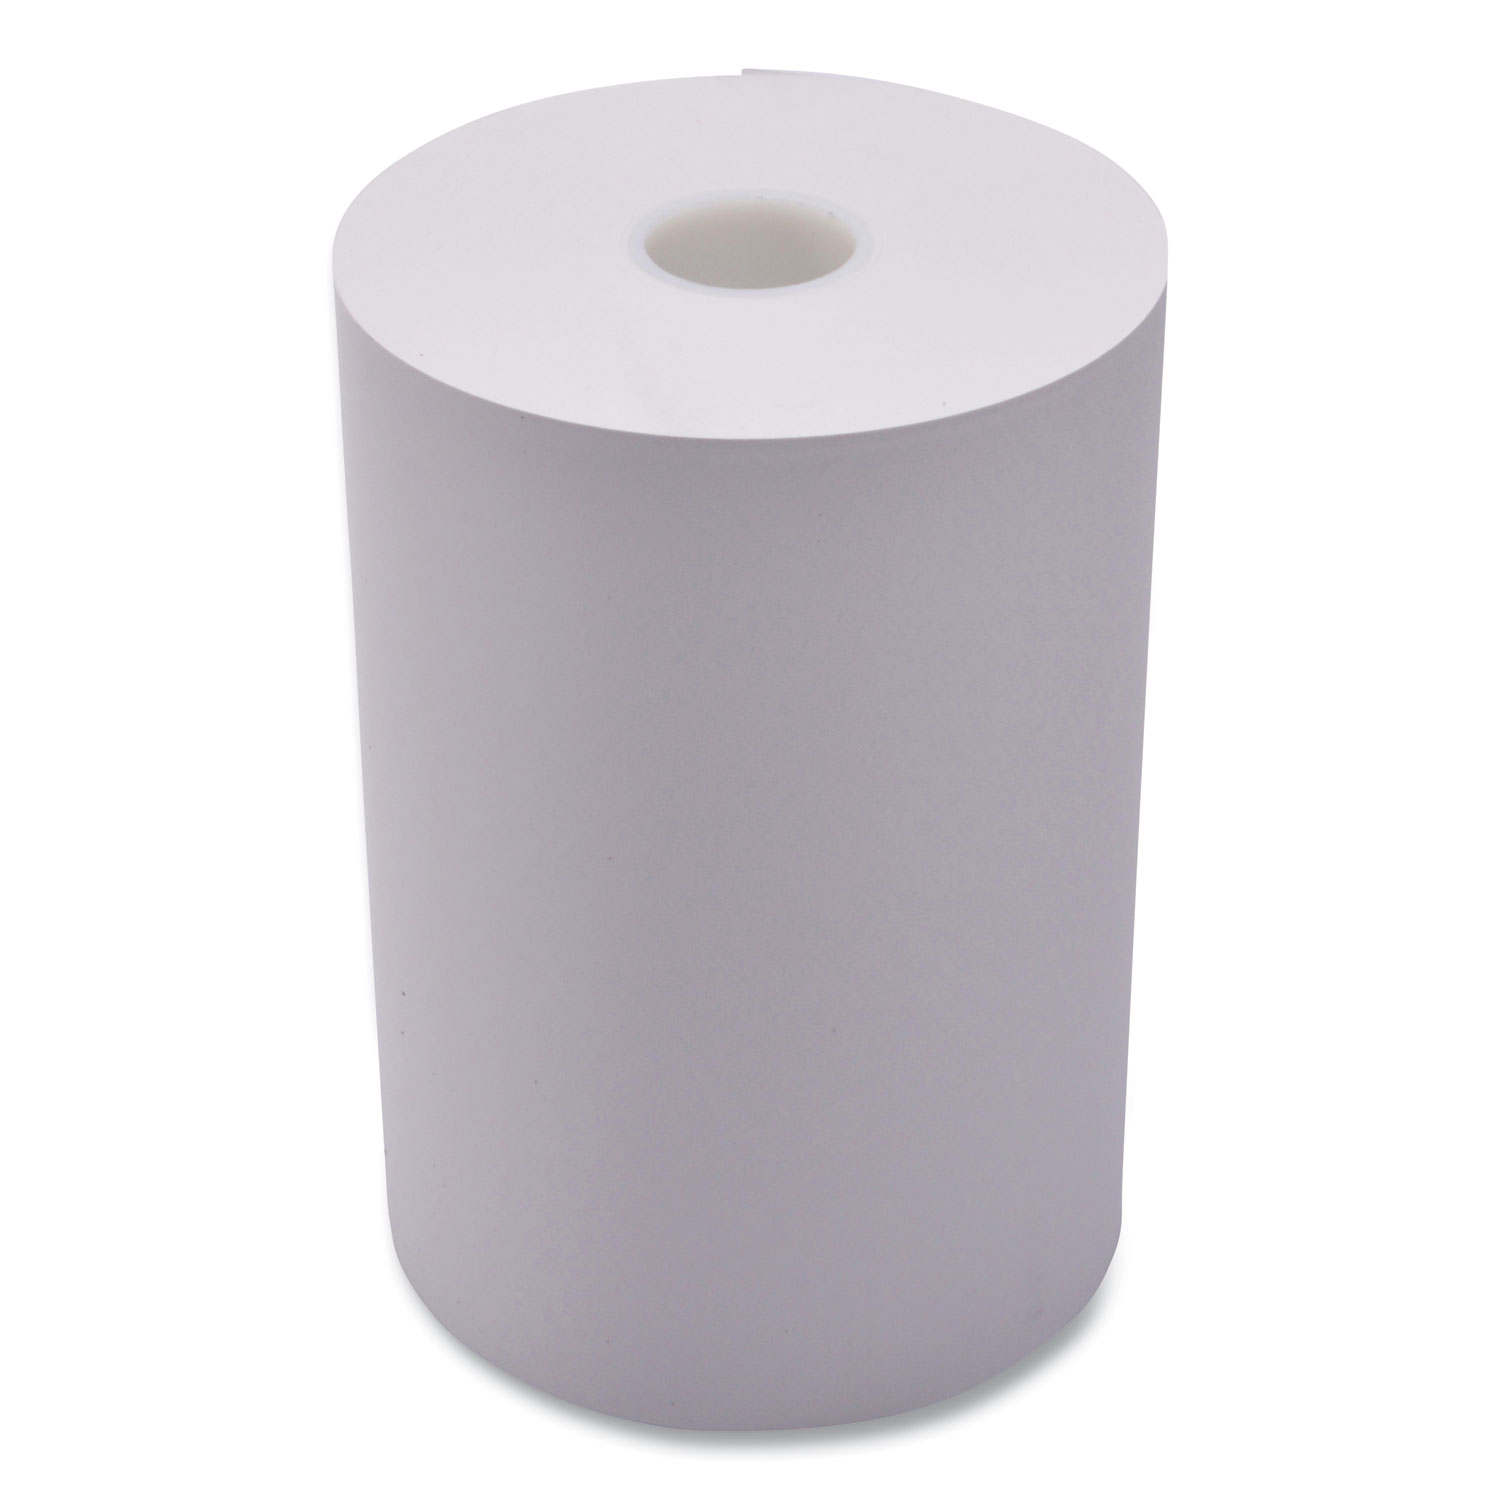  Iconex 9074-2242 Impact Bond Paper Rolls, 1-Ply, 3.25 x 243 ft, White, 4/Pack (ICX90742242) 